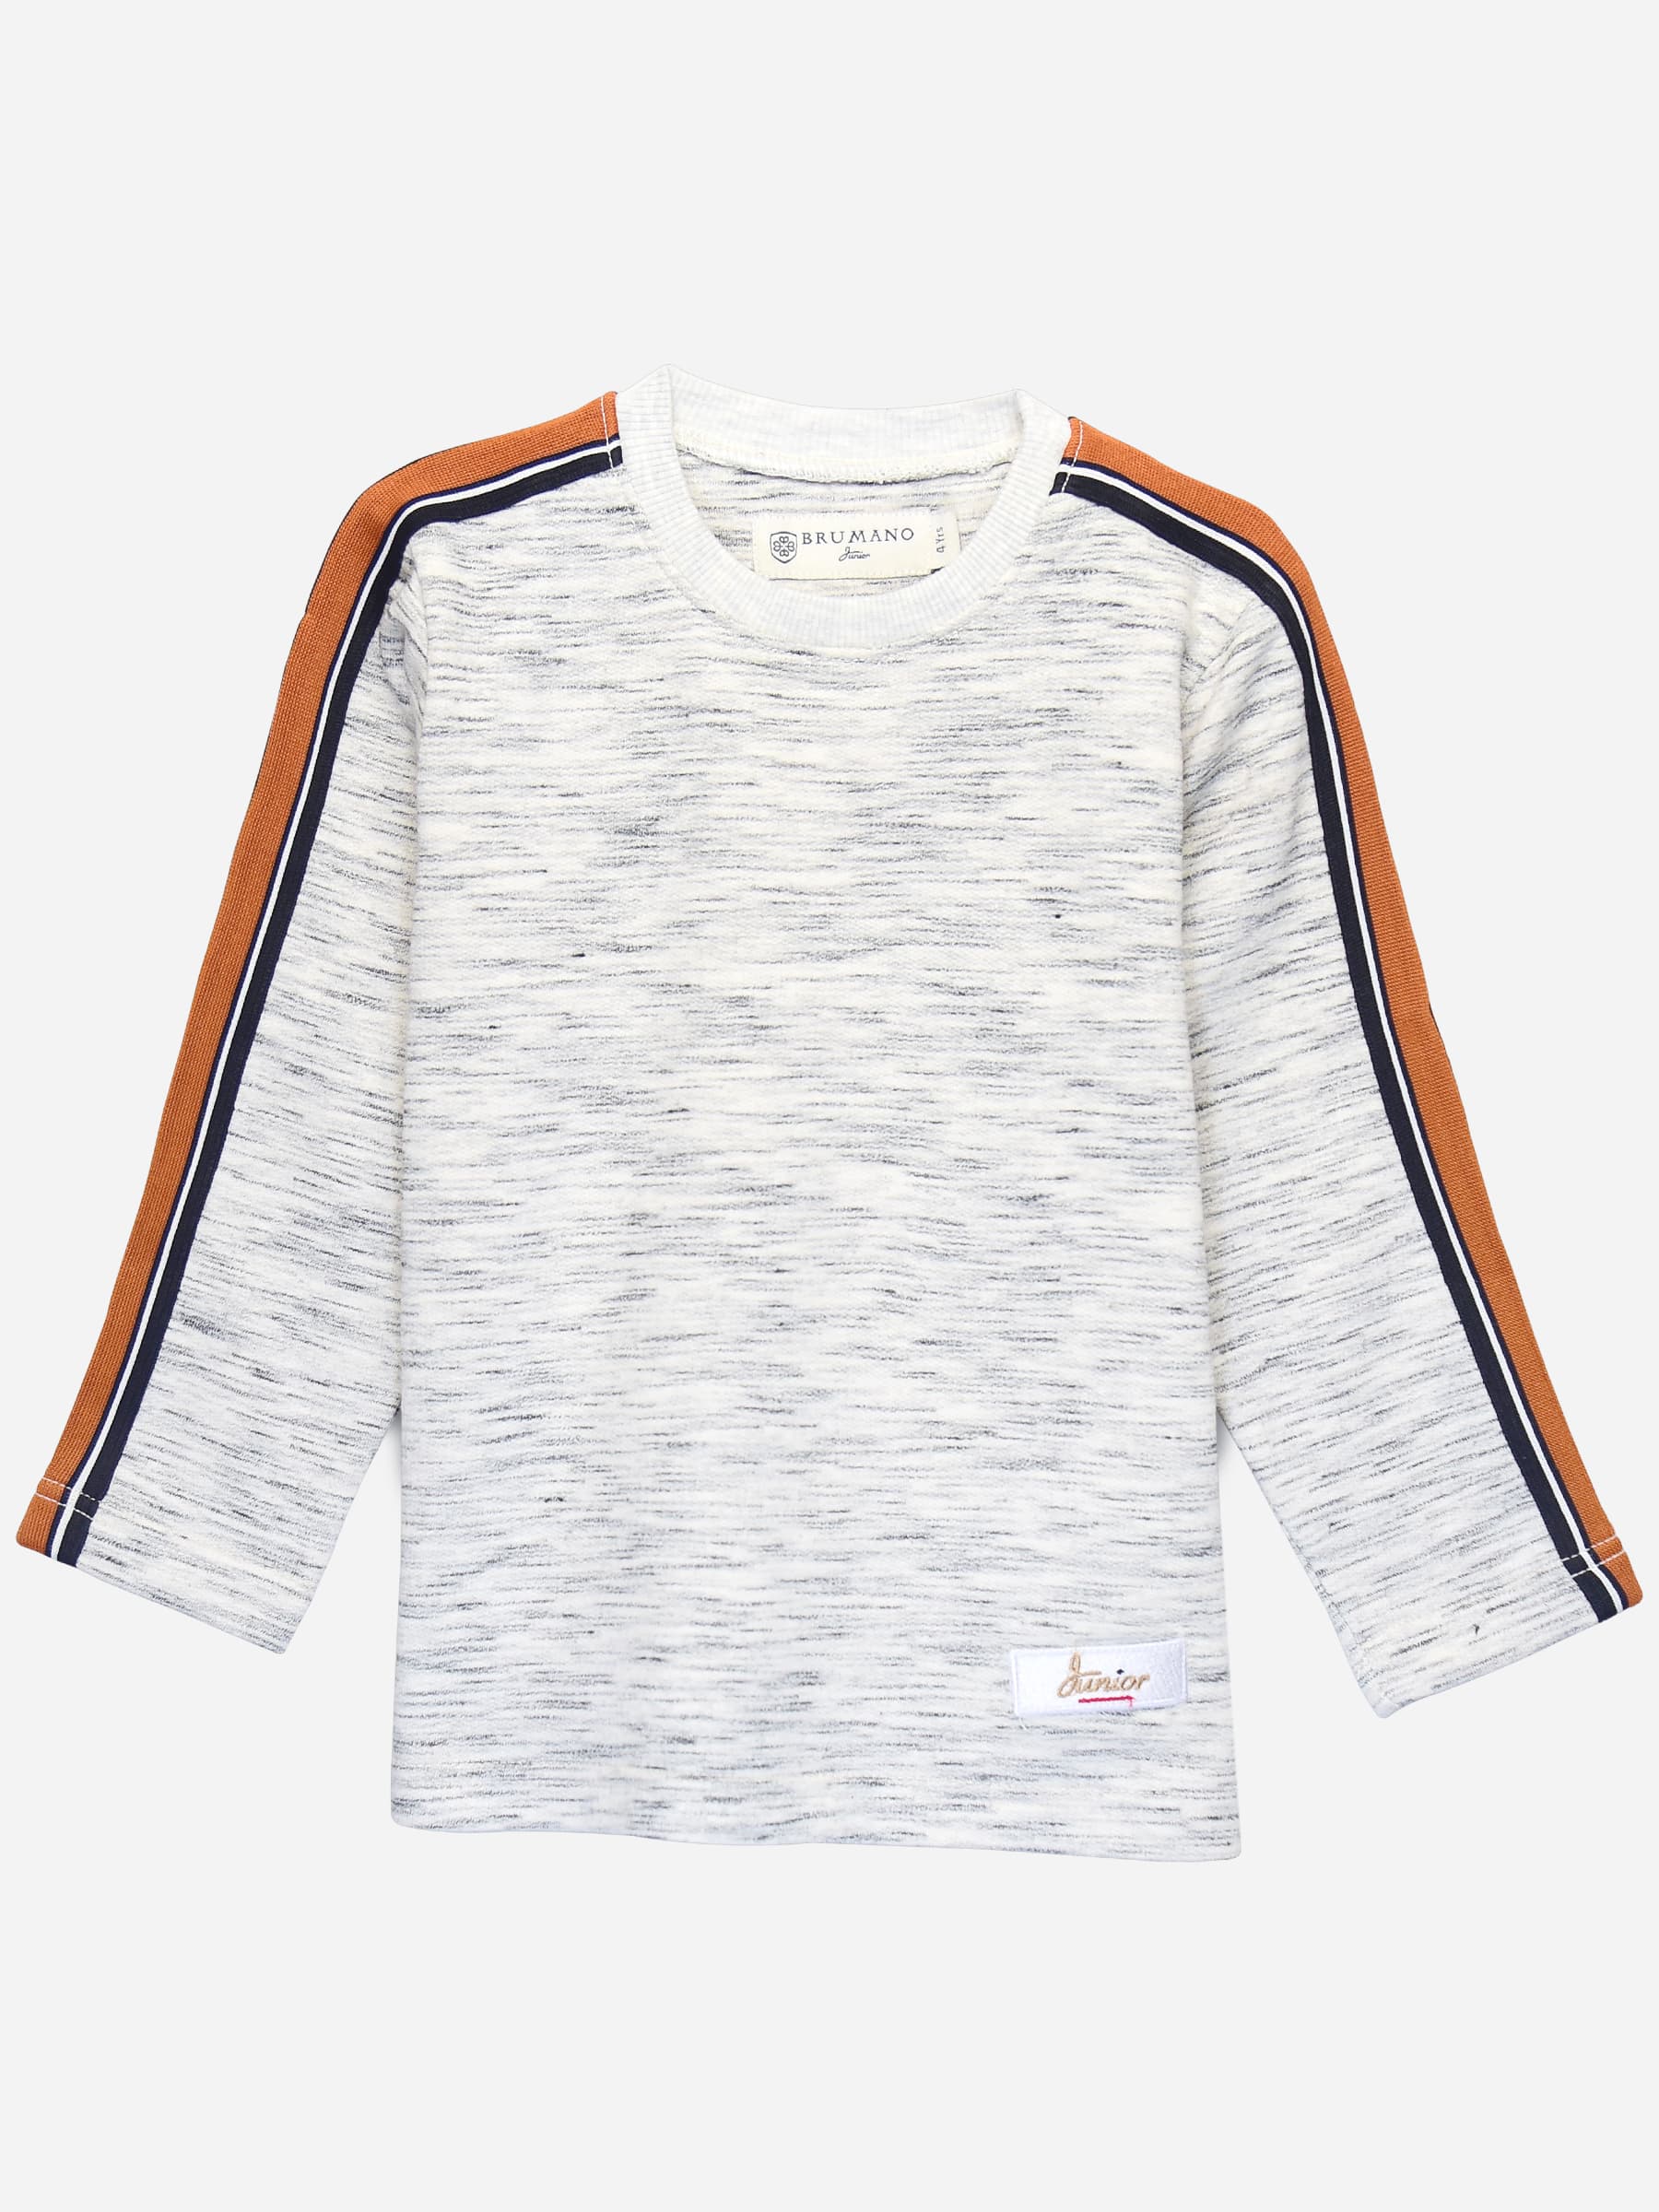 Inject Patterned Sweatshirt With Orange Stripe Detailing Brumano Pakistan